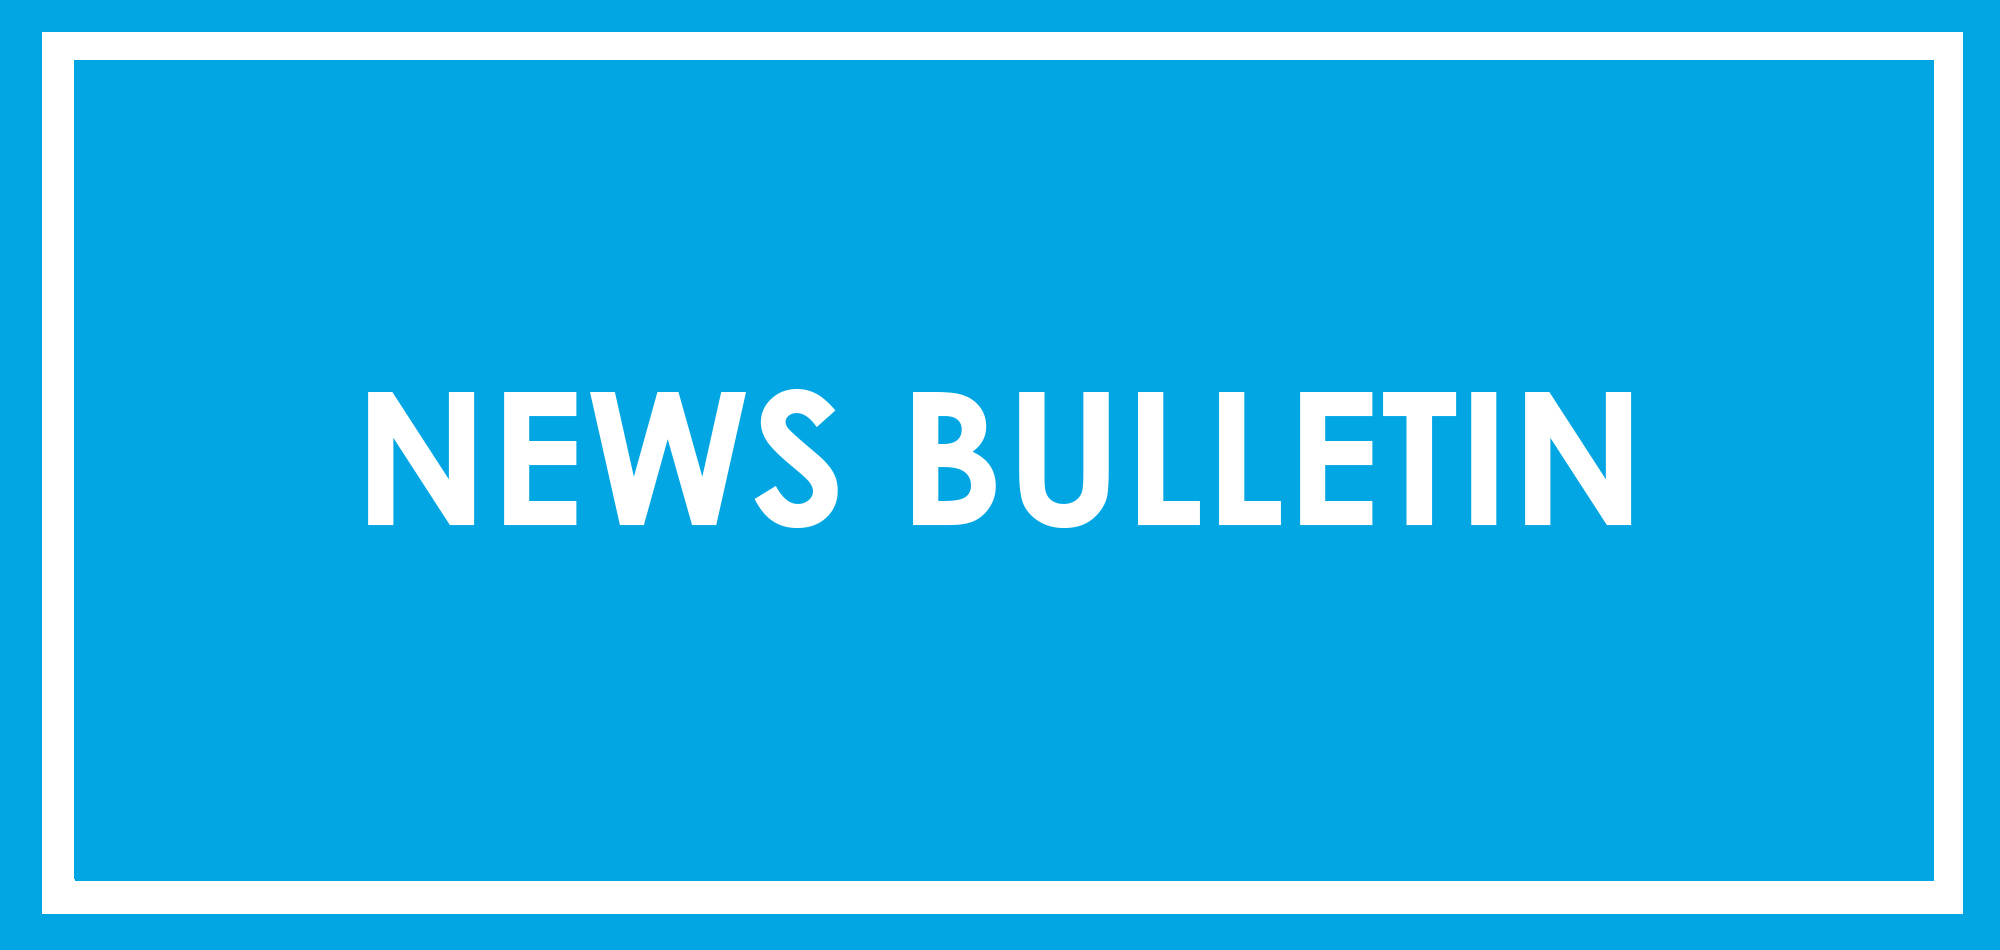 News Bulletin - 07.07.20